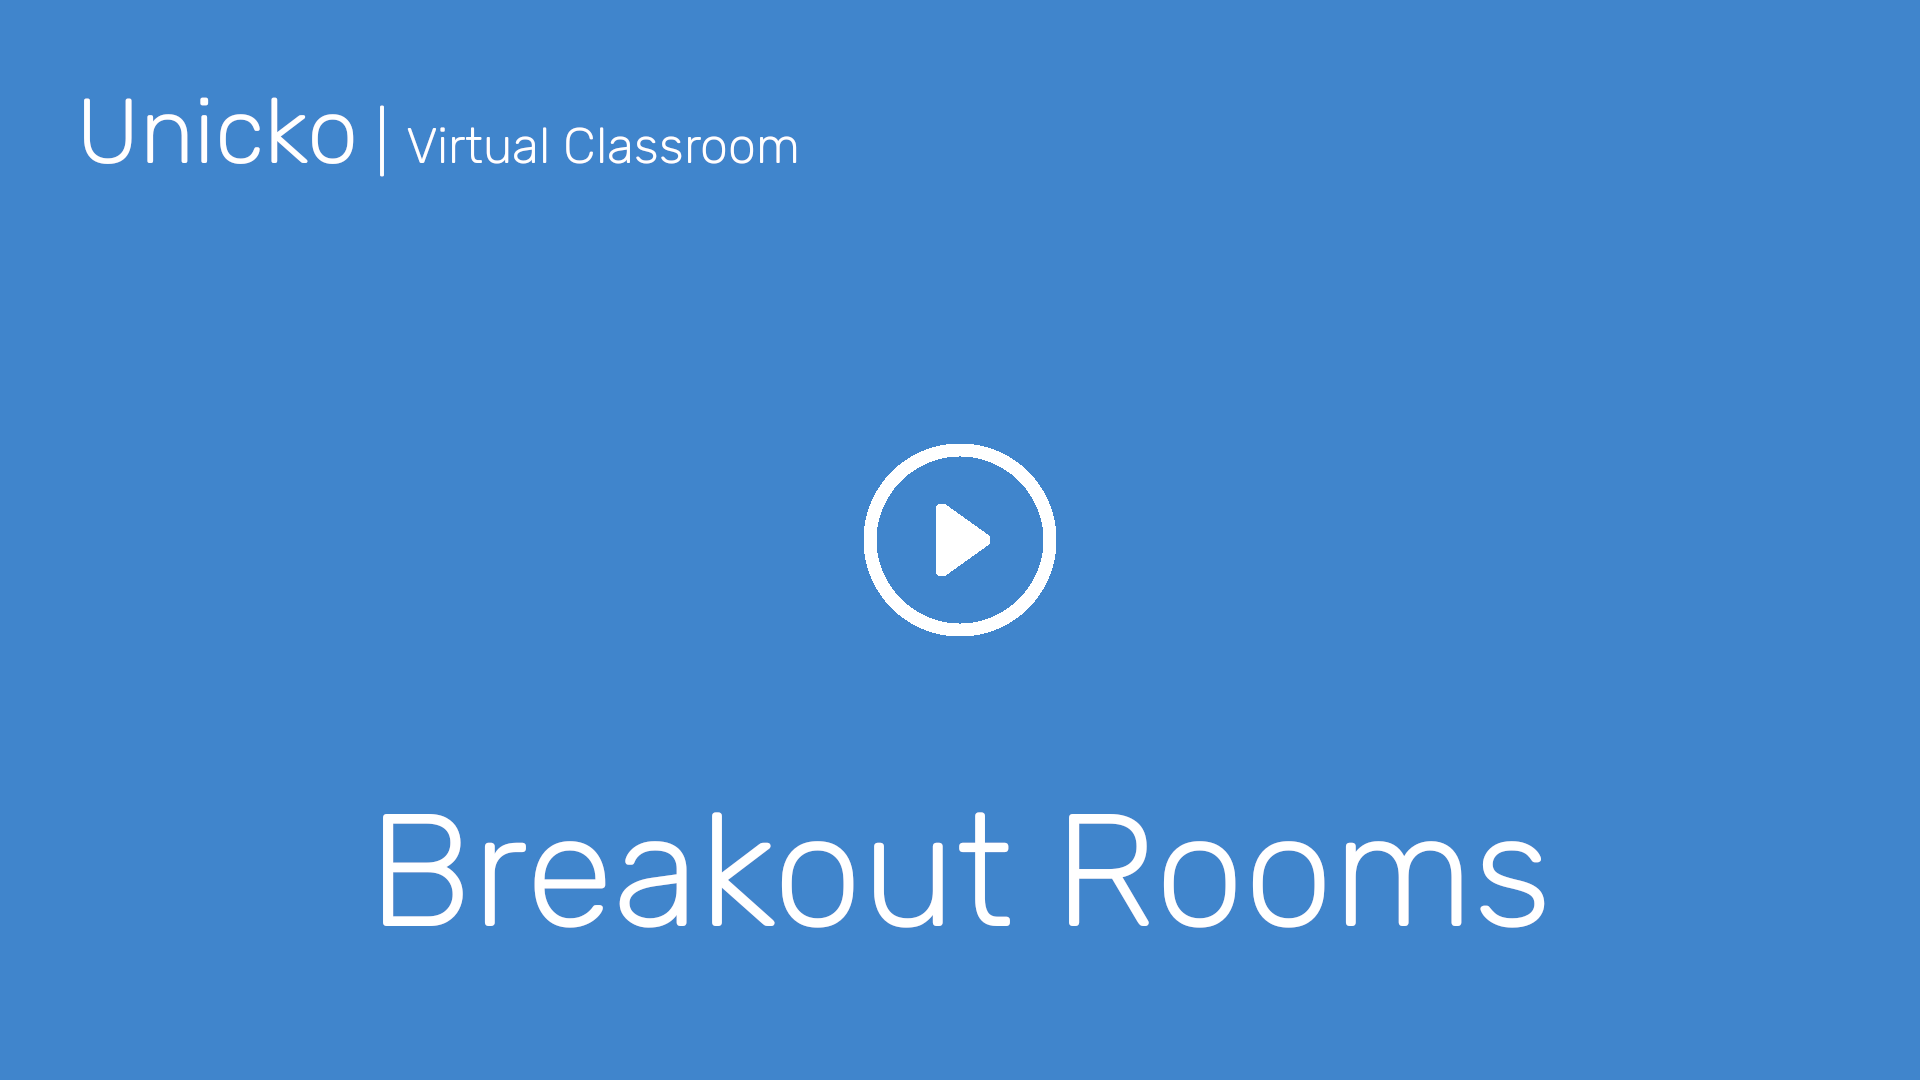 Breakout rooms